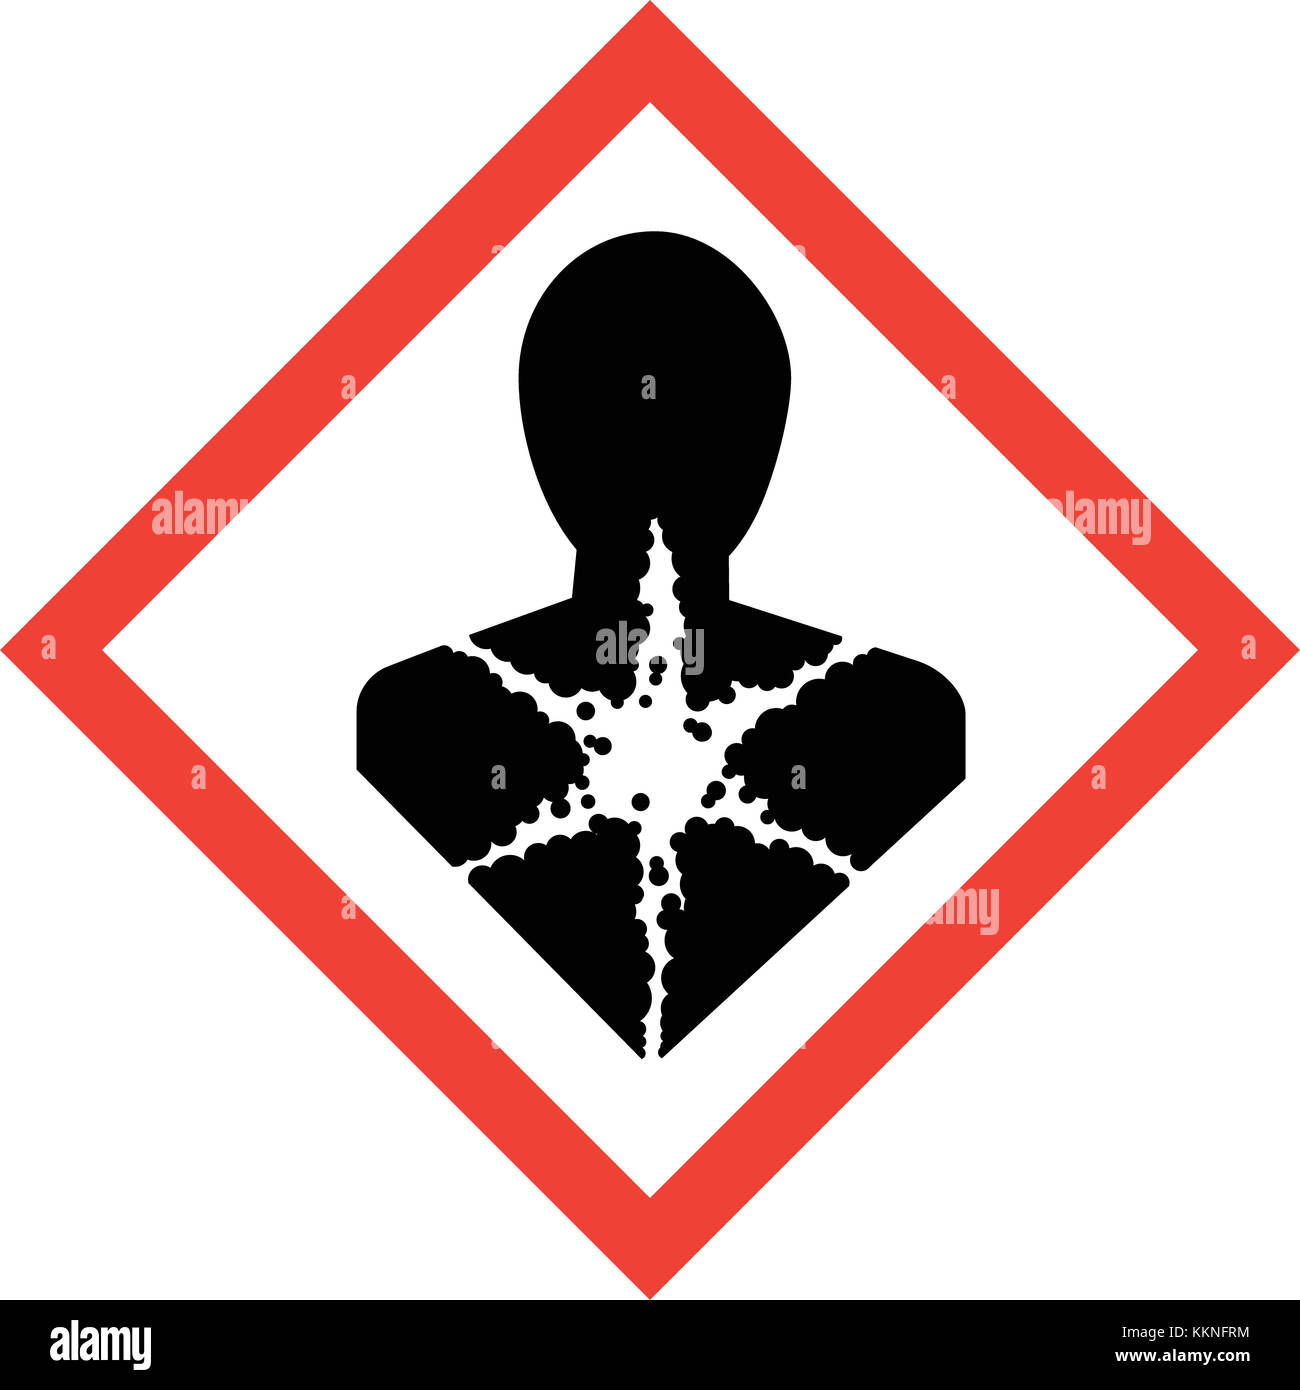 Hazard sign with carcinogenic substances symbol Stock Photo - Alamy